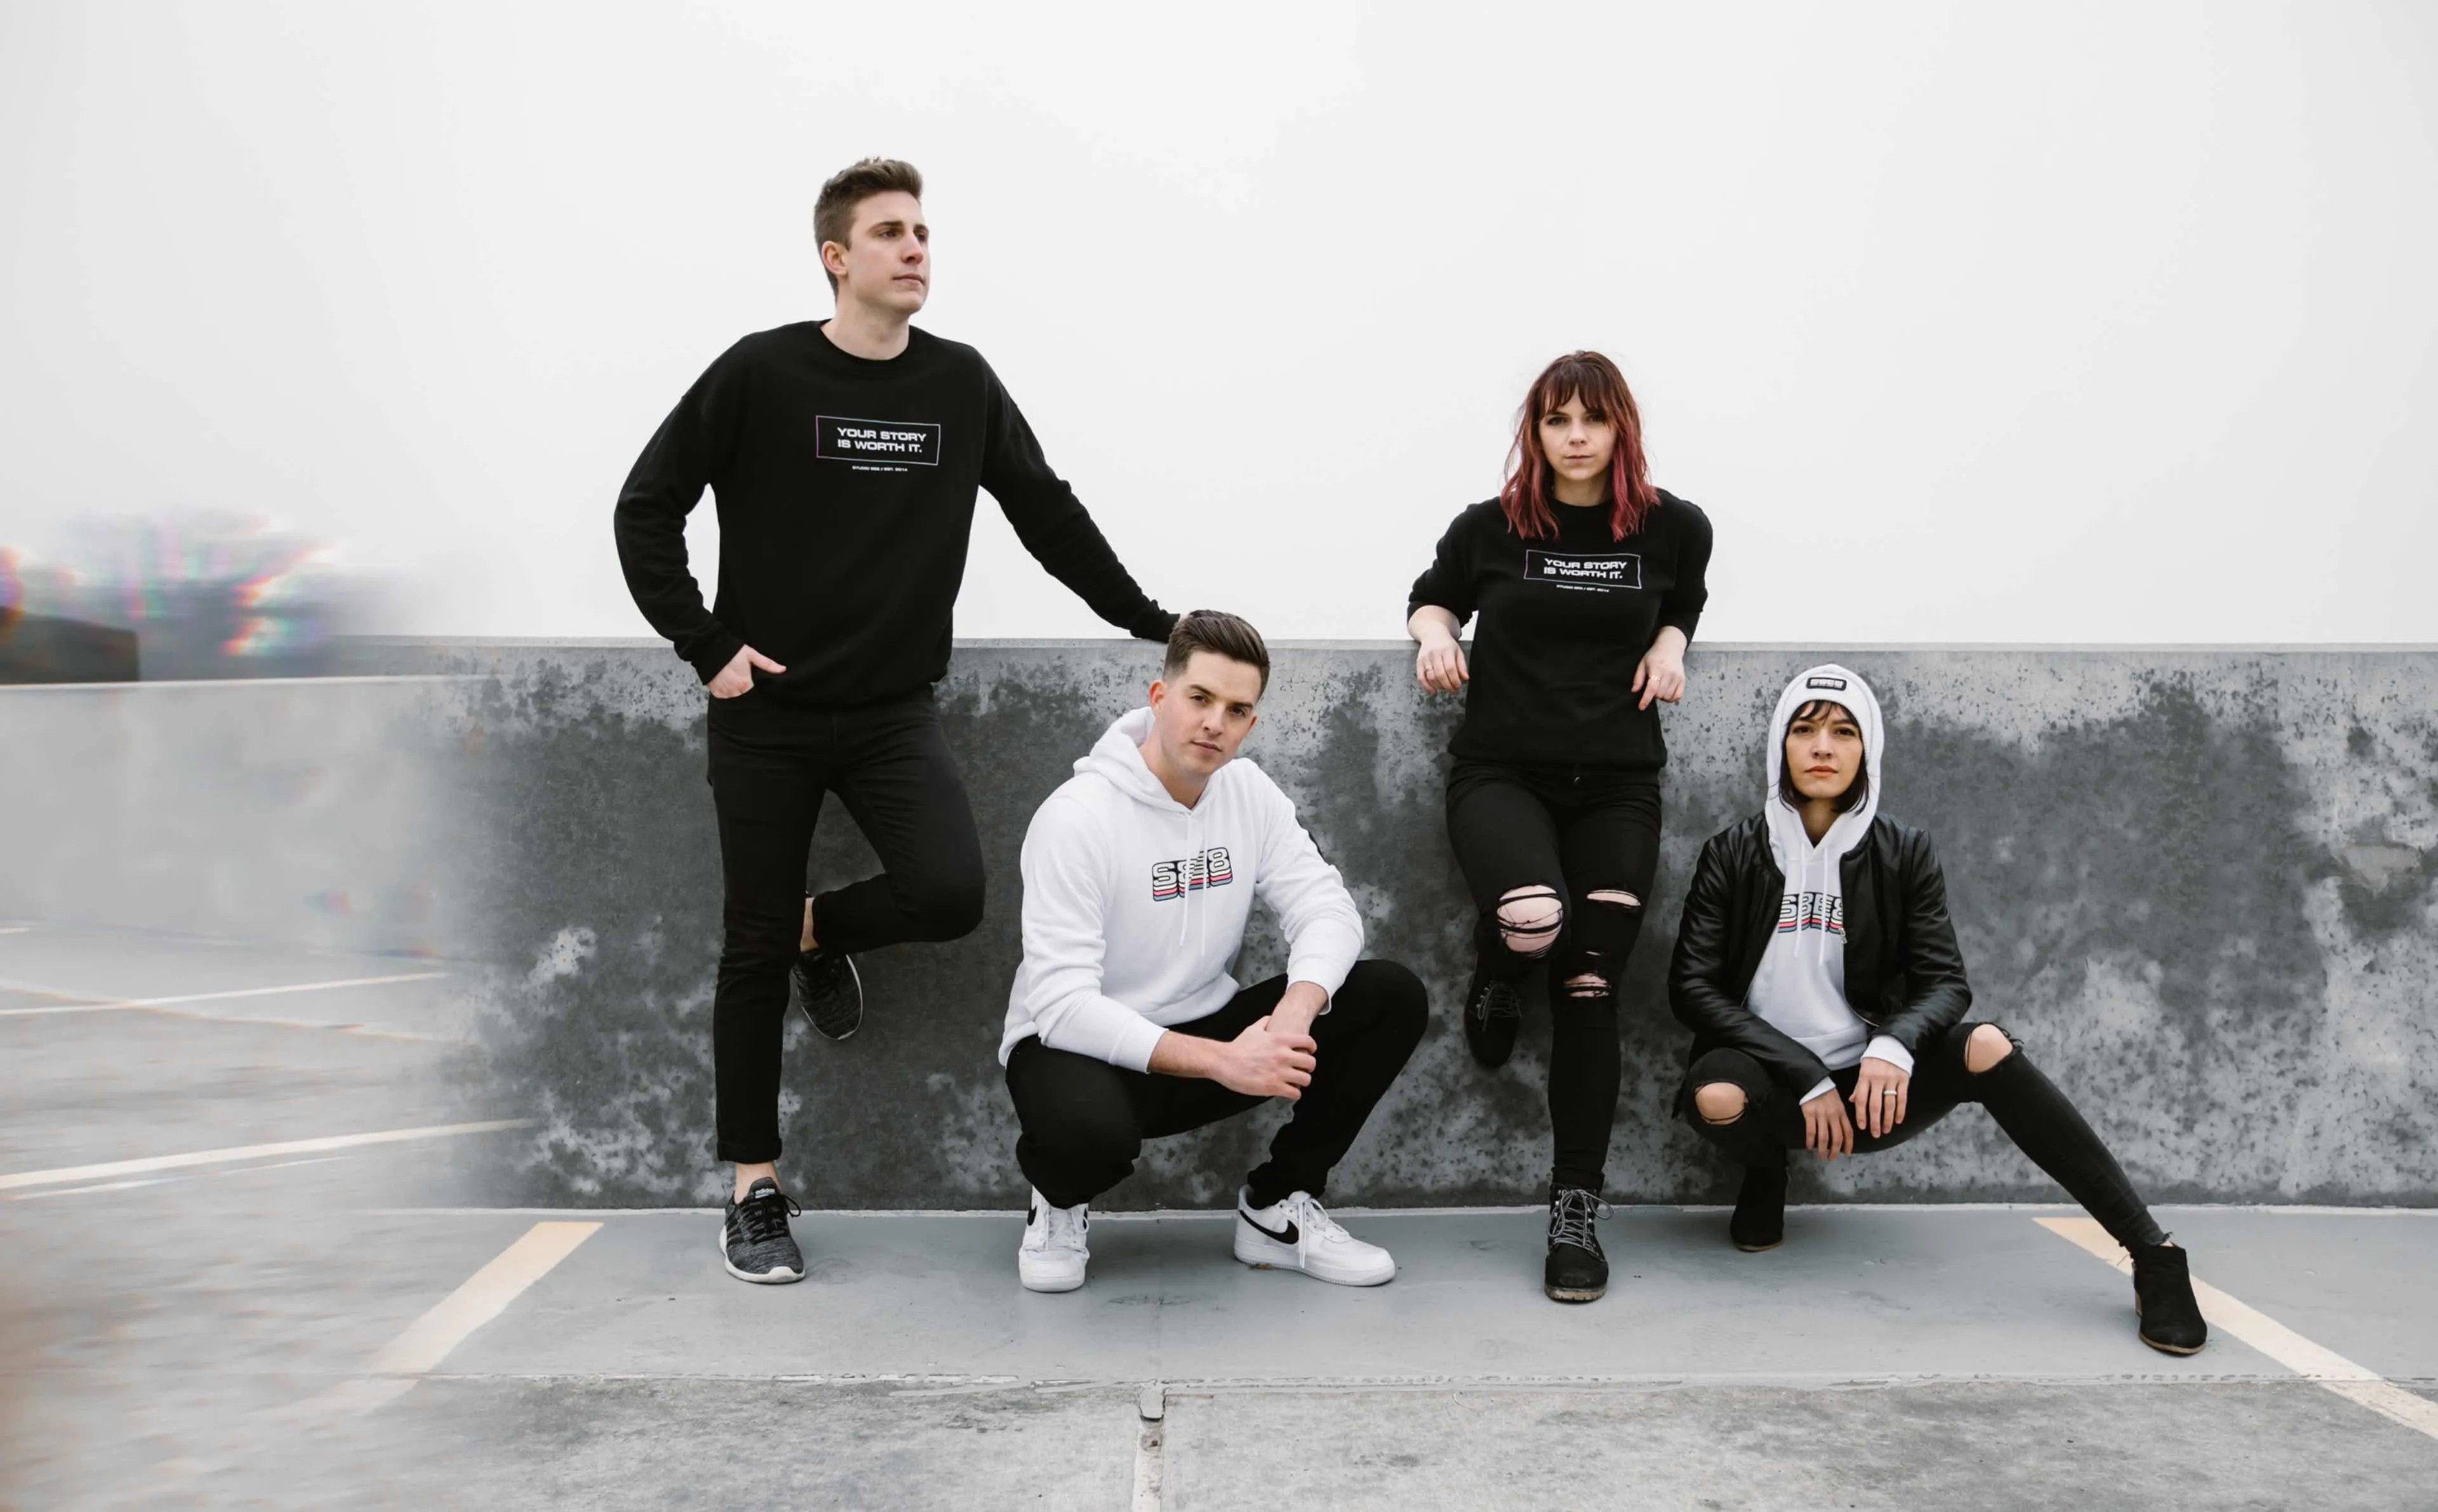 Photo of the Studio 8E8 team wearing their hoodies and sweatshirts